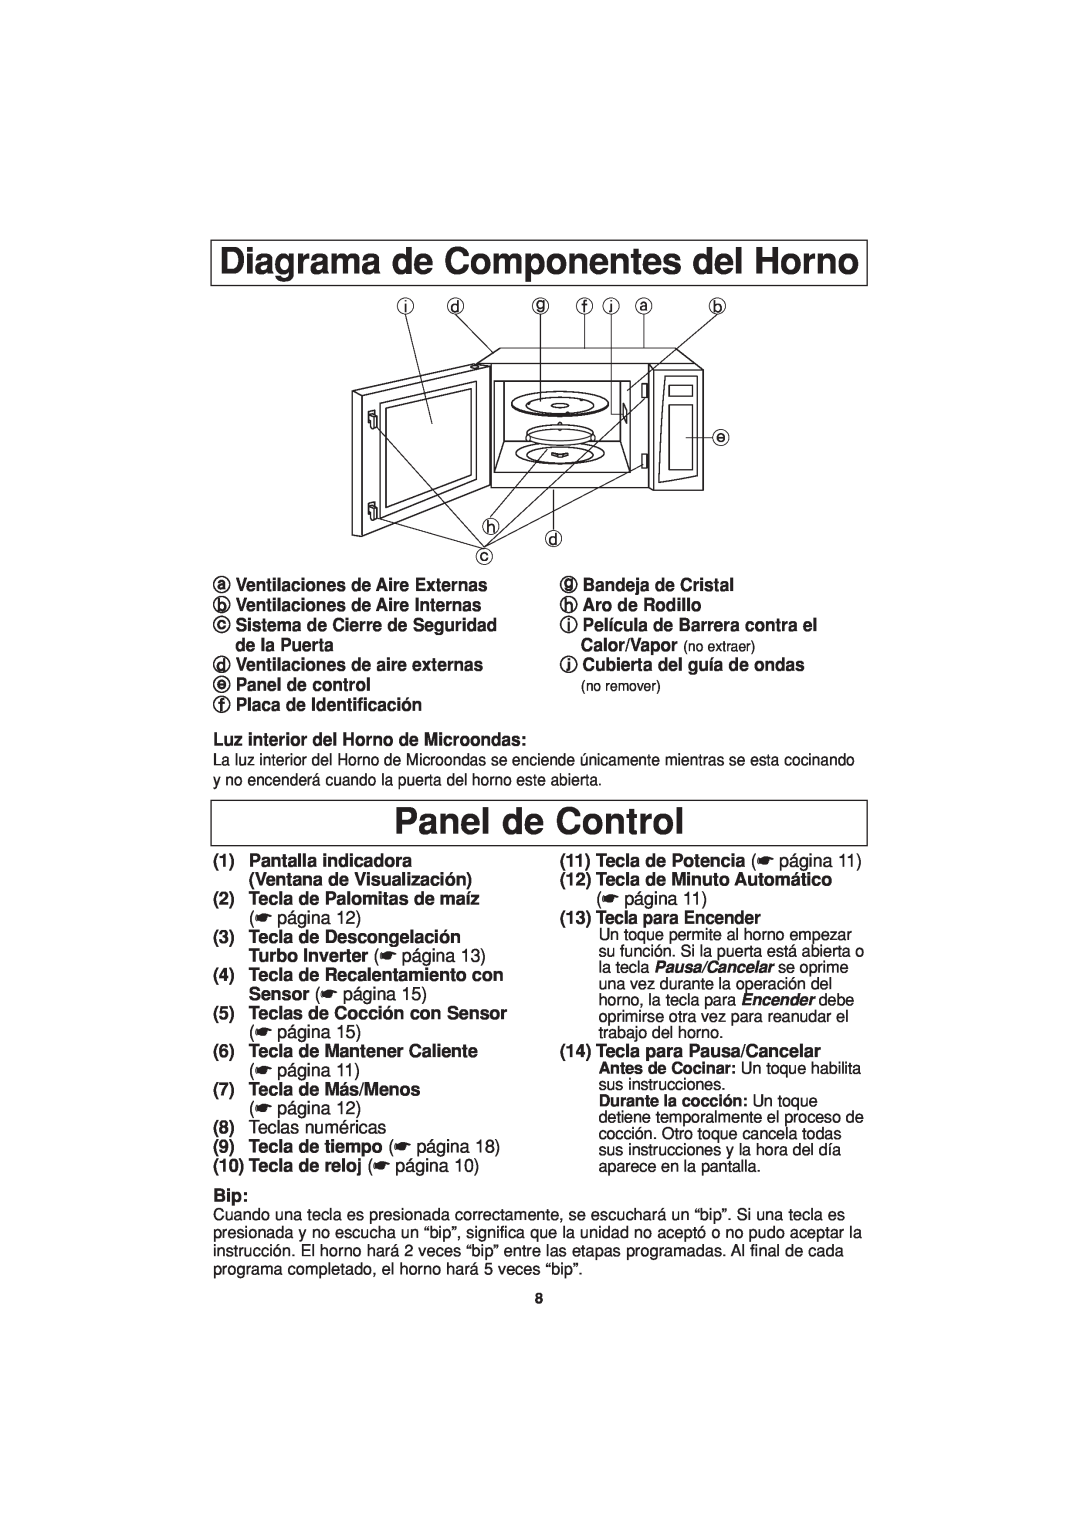 Panasonic NN-H604, NN-H614, NN-H504 important safety instructions Diagrama de Componentes del Horno, Panel de Control 